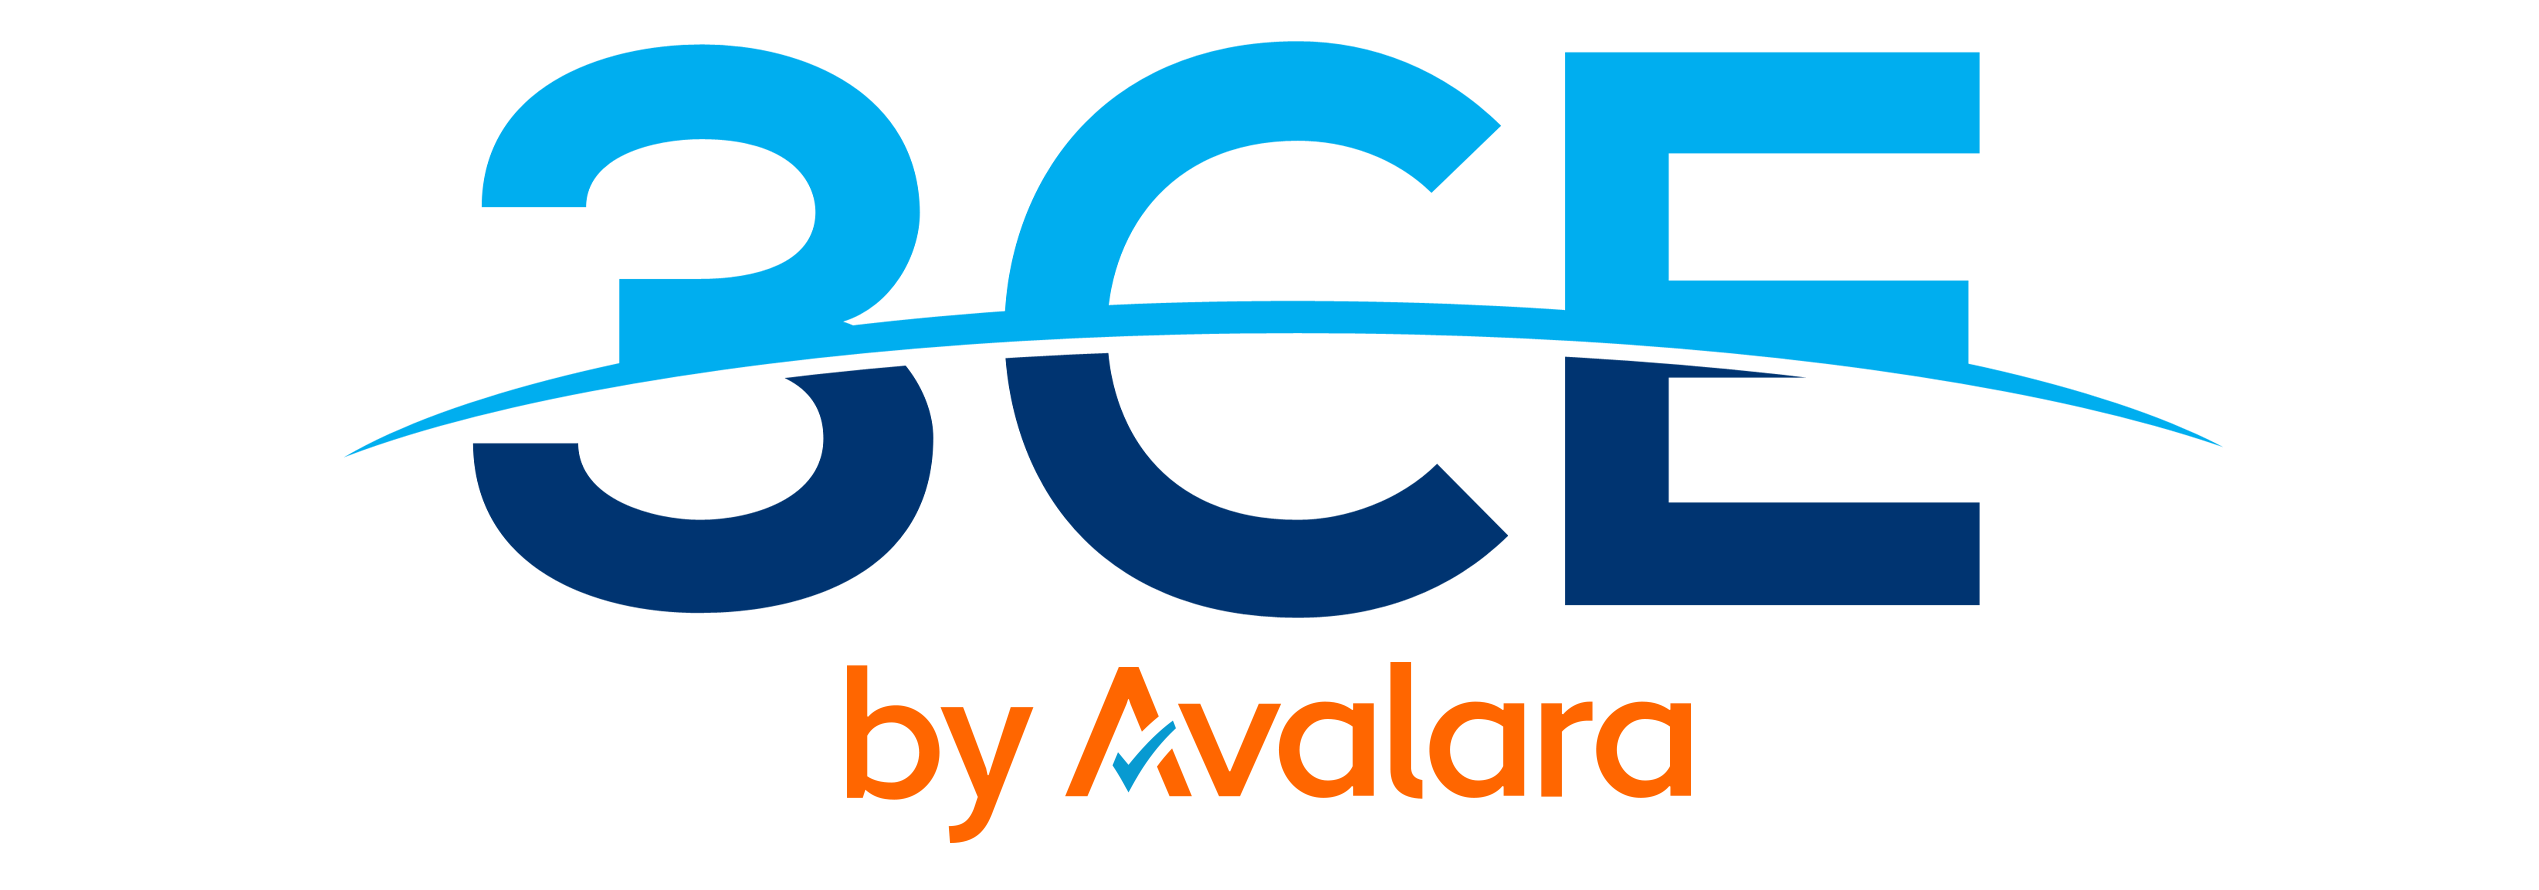 ccce logo